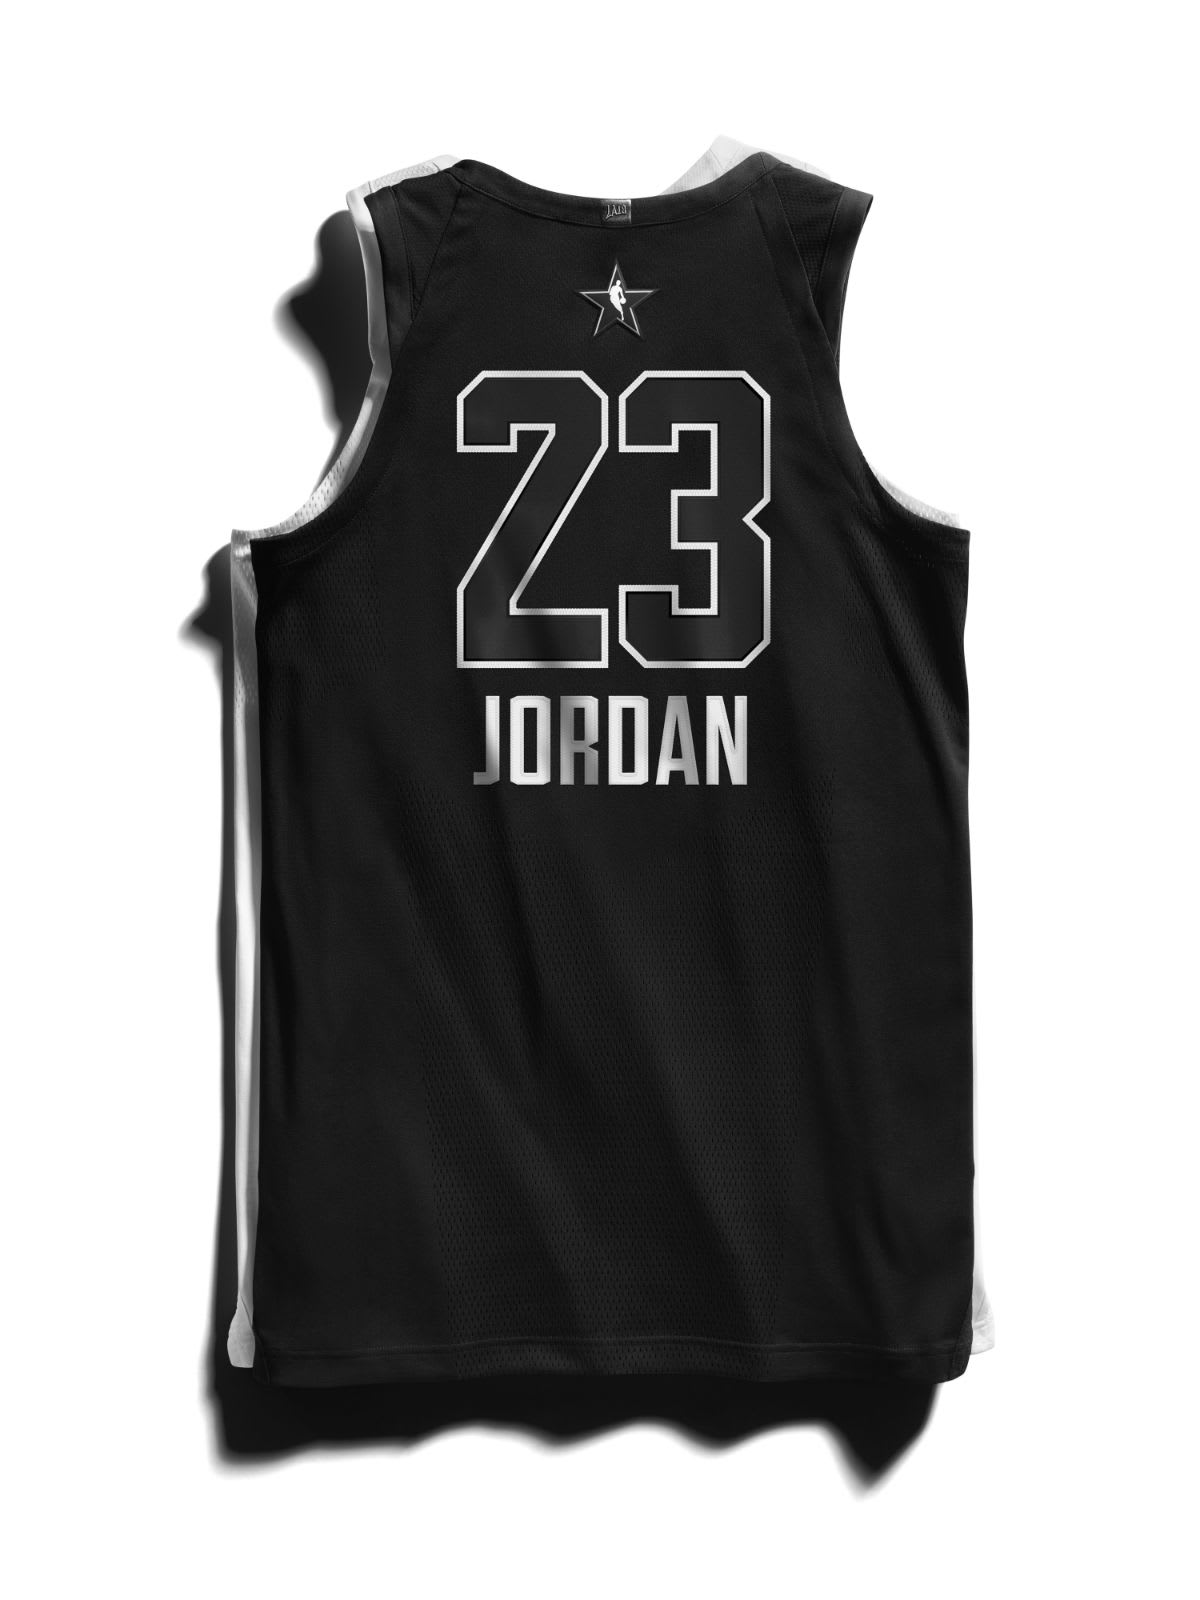 Jordan Brand 2018 NBA All-Star Jerseys Back